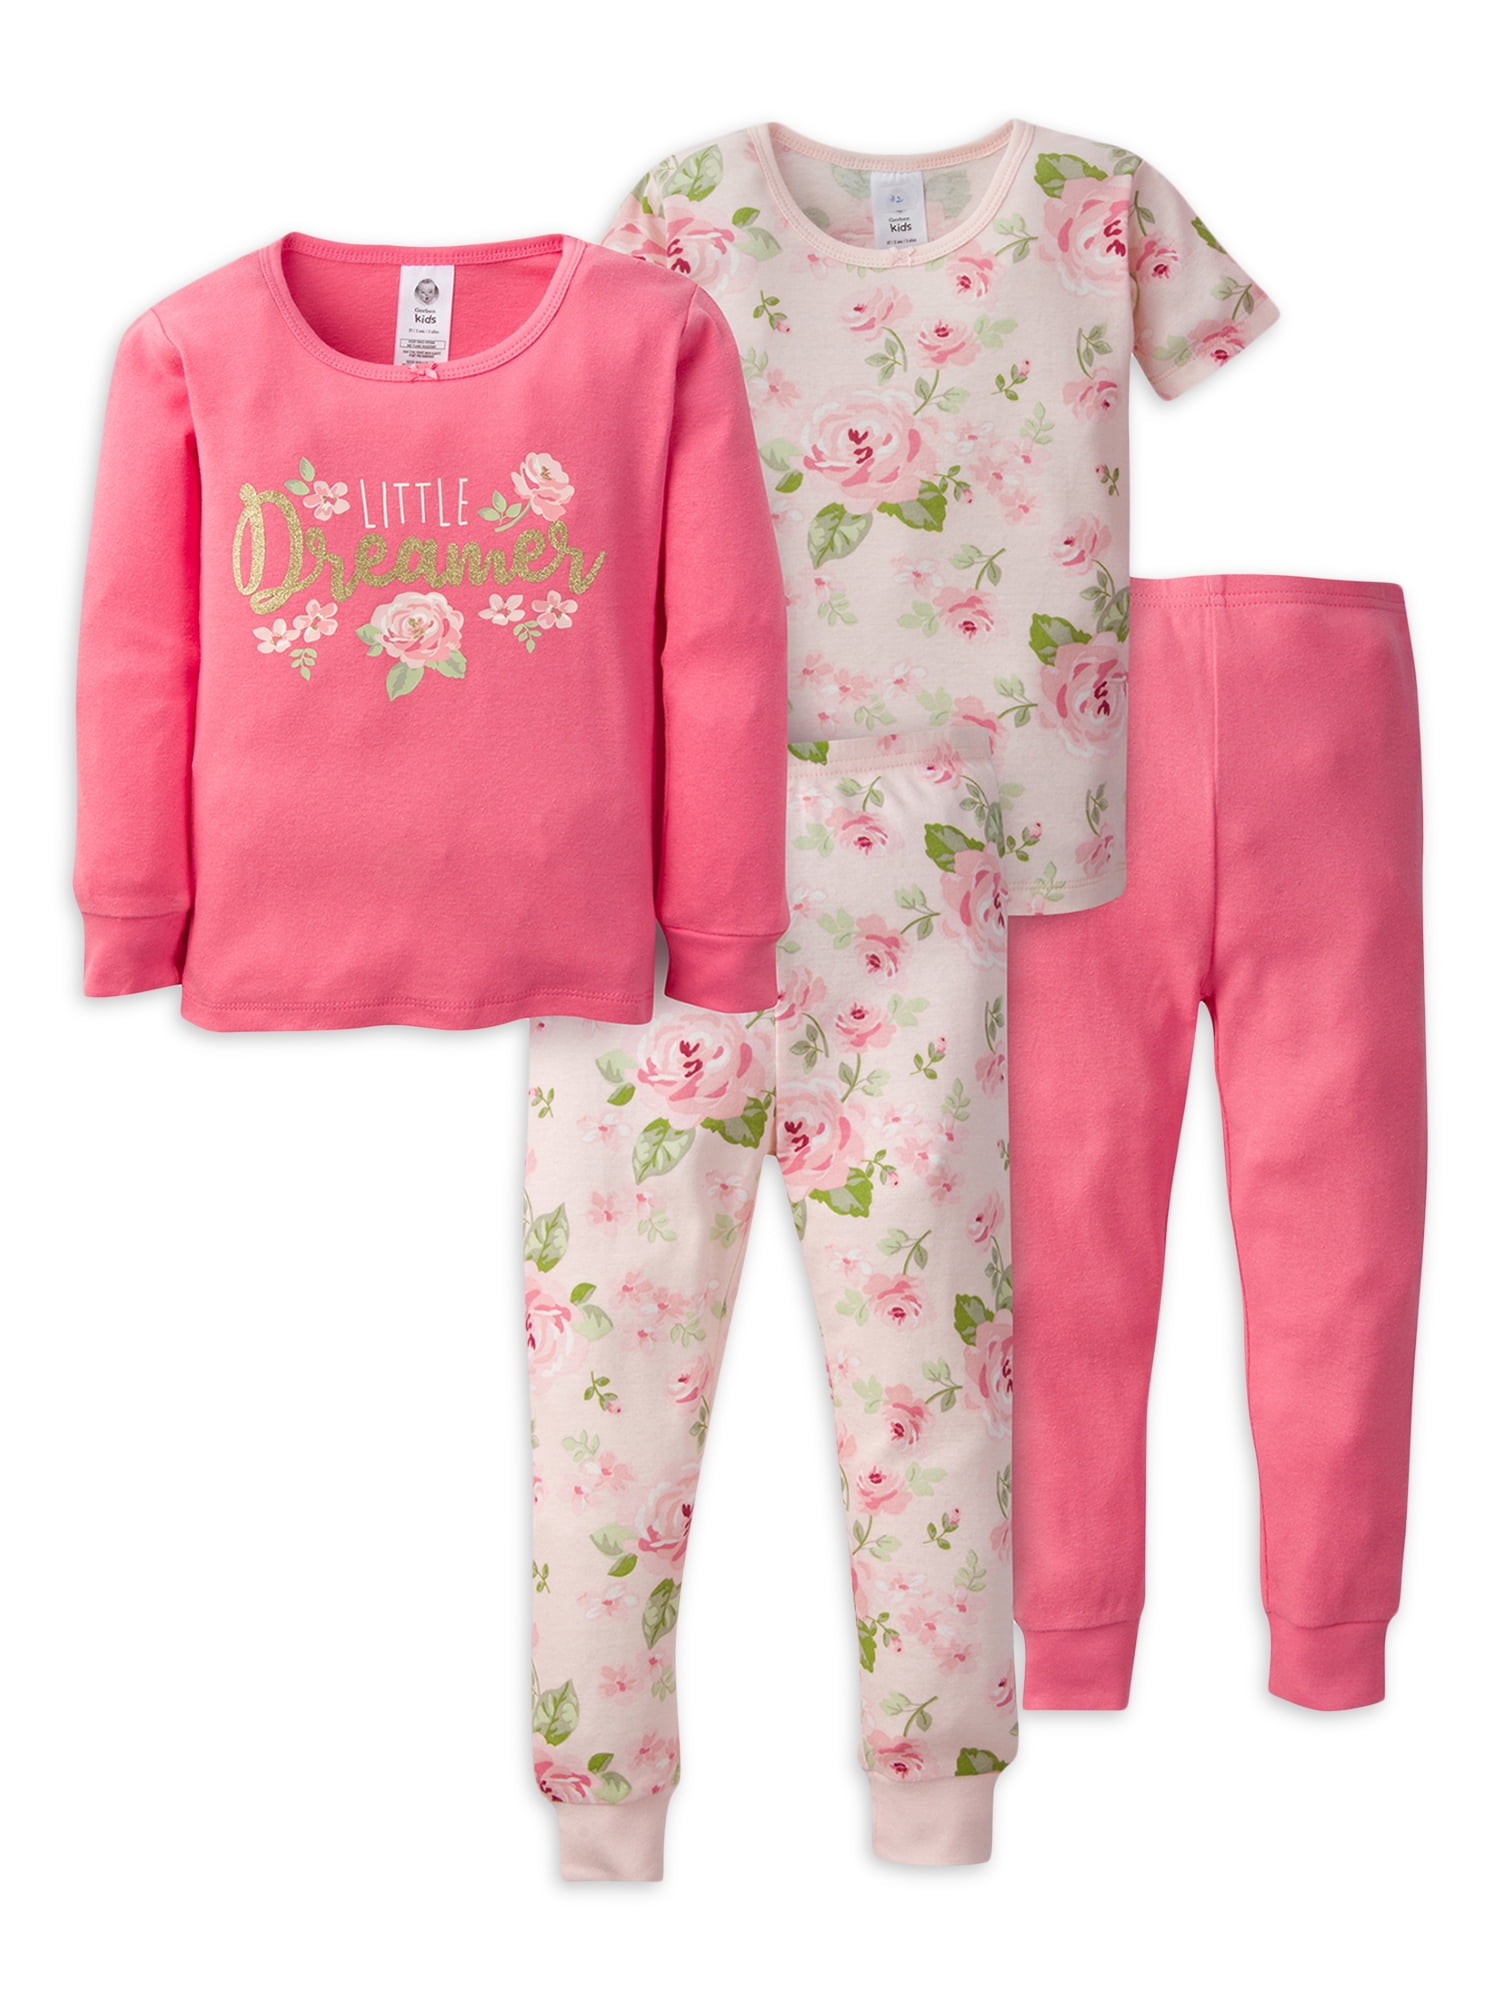 Hop To Bed Pajamas 2T Retail $34! Carters Girls 2T 4 Piece Long Pants Bunny 